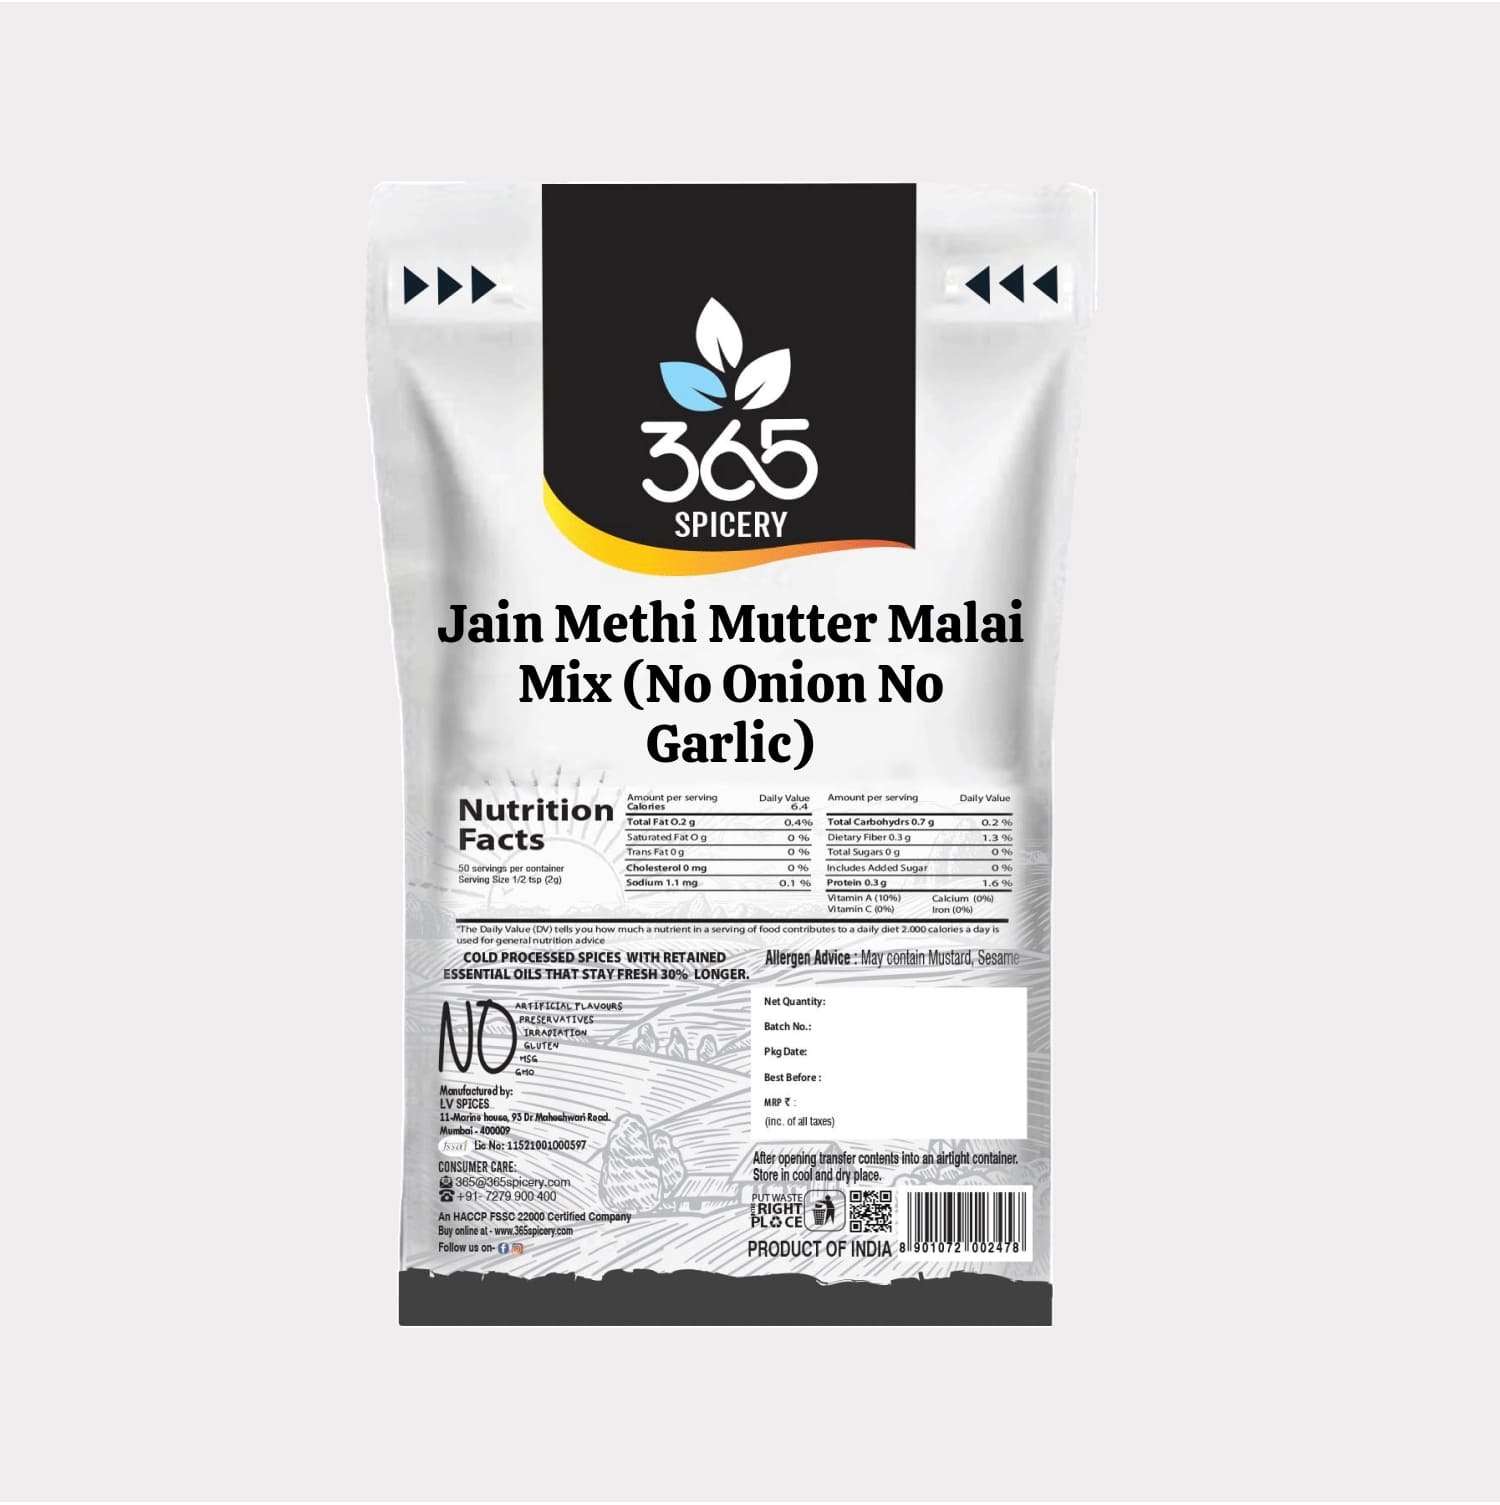 Jain Methi Mutter Malai Mix (No Onion No Garlic)